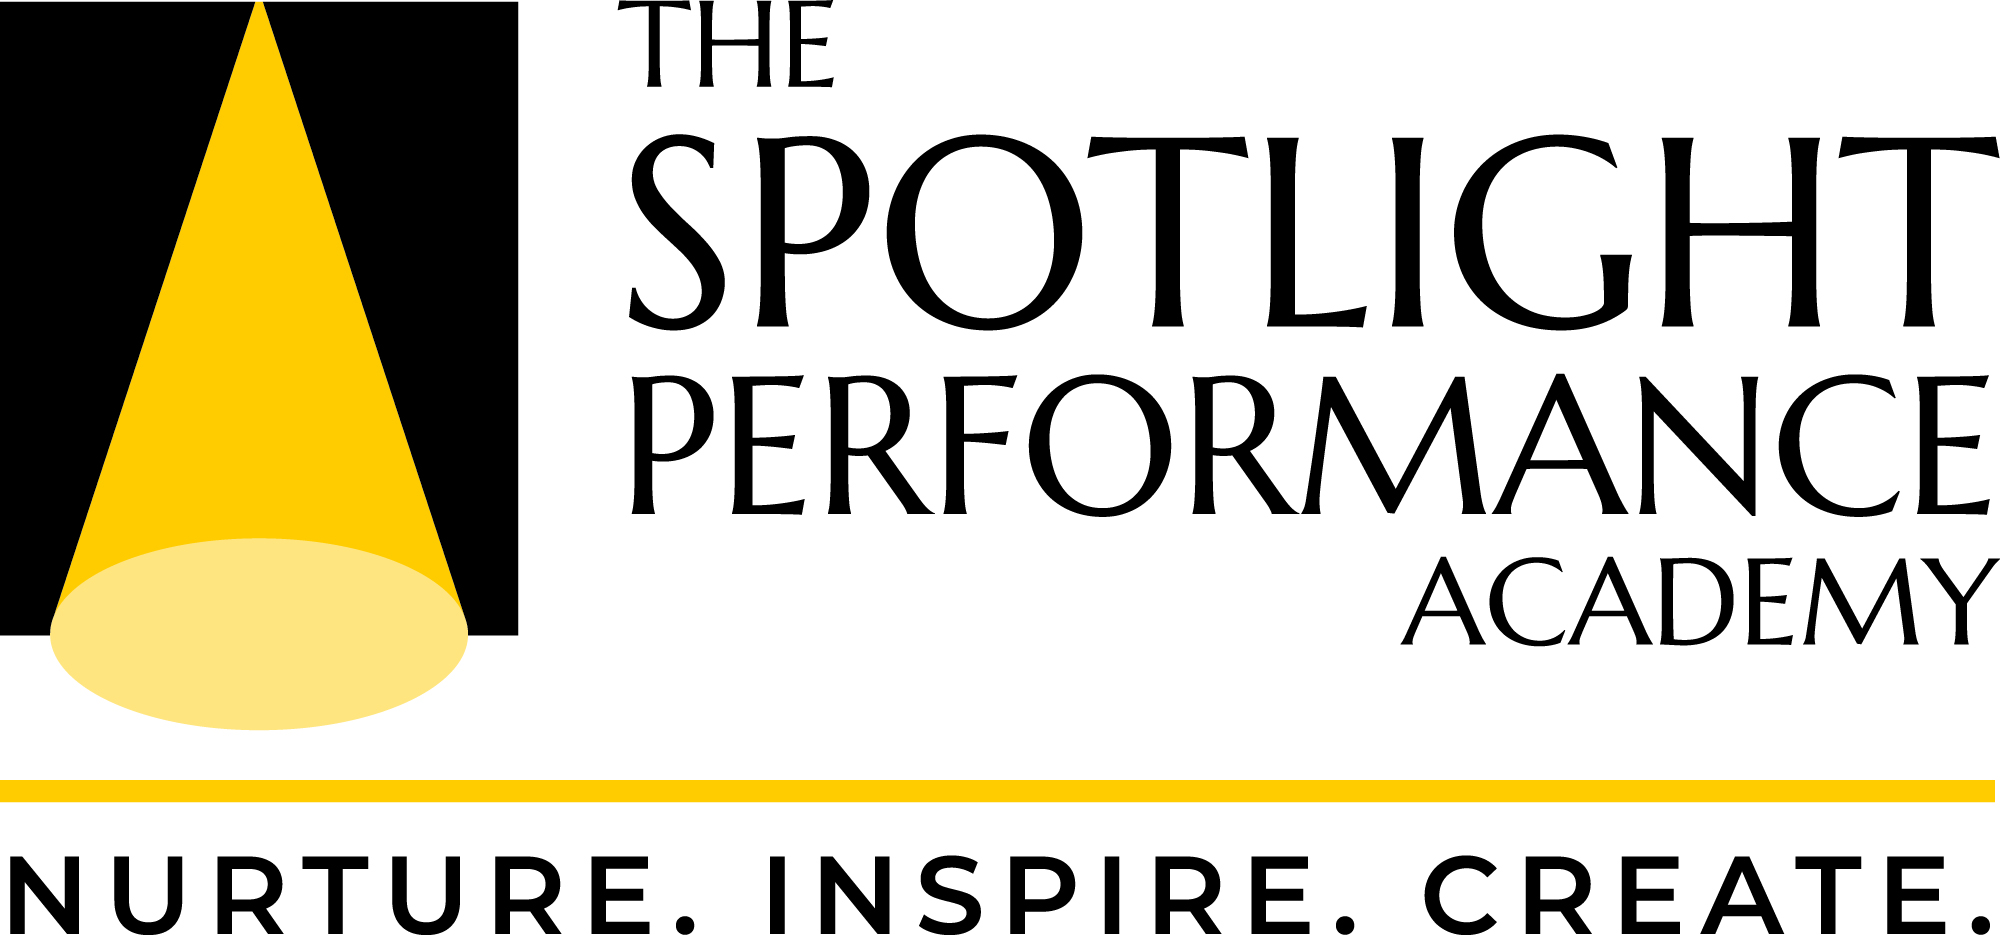 Spotlight Performance Academy Nfp logo